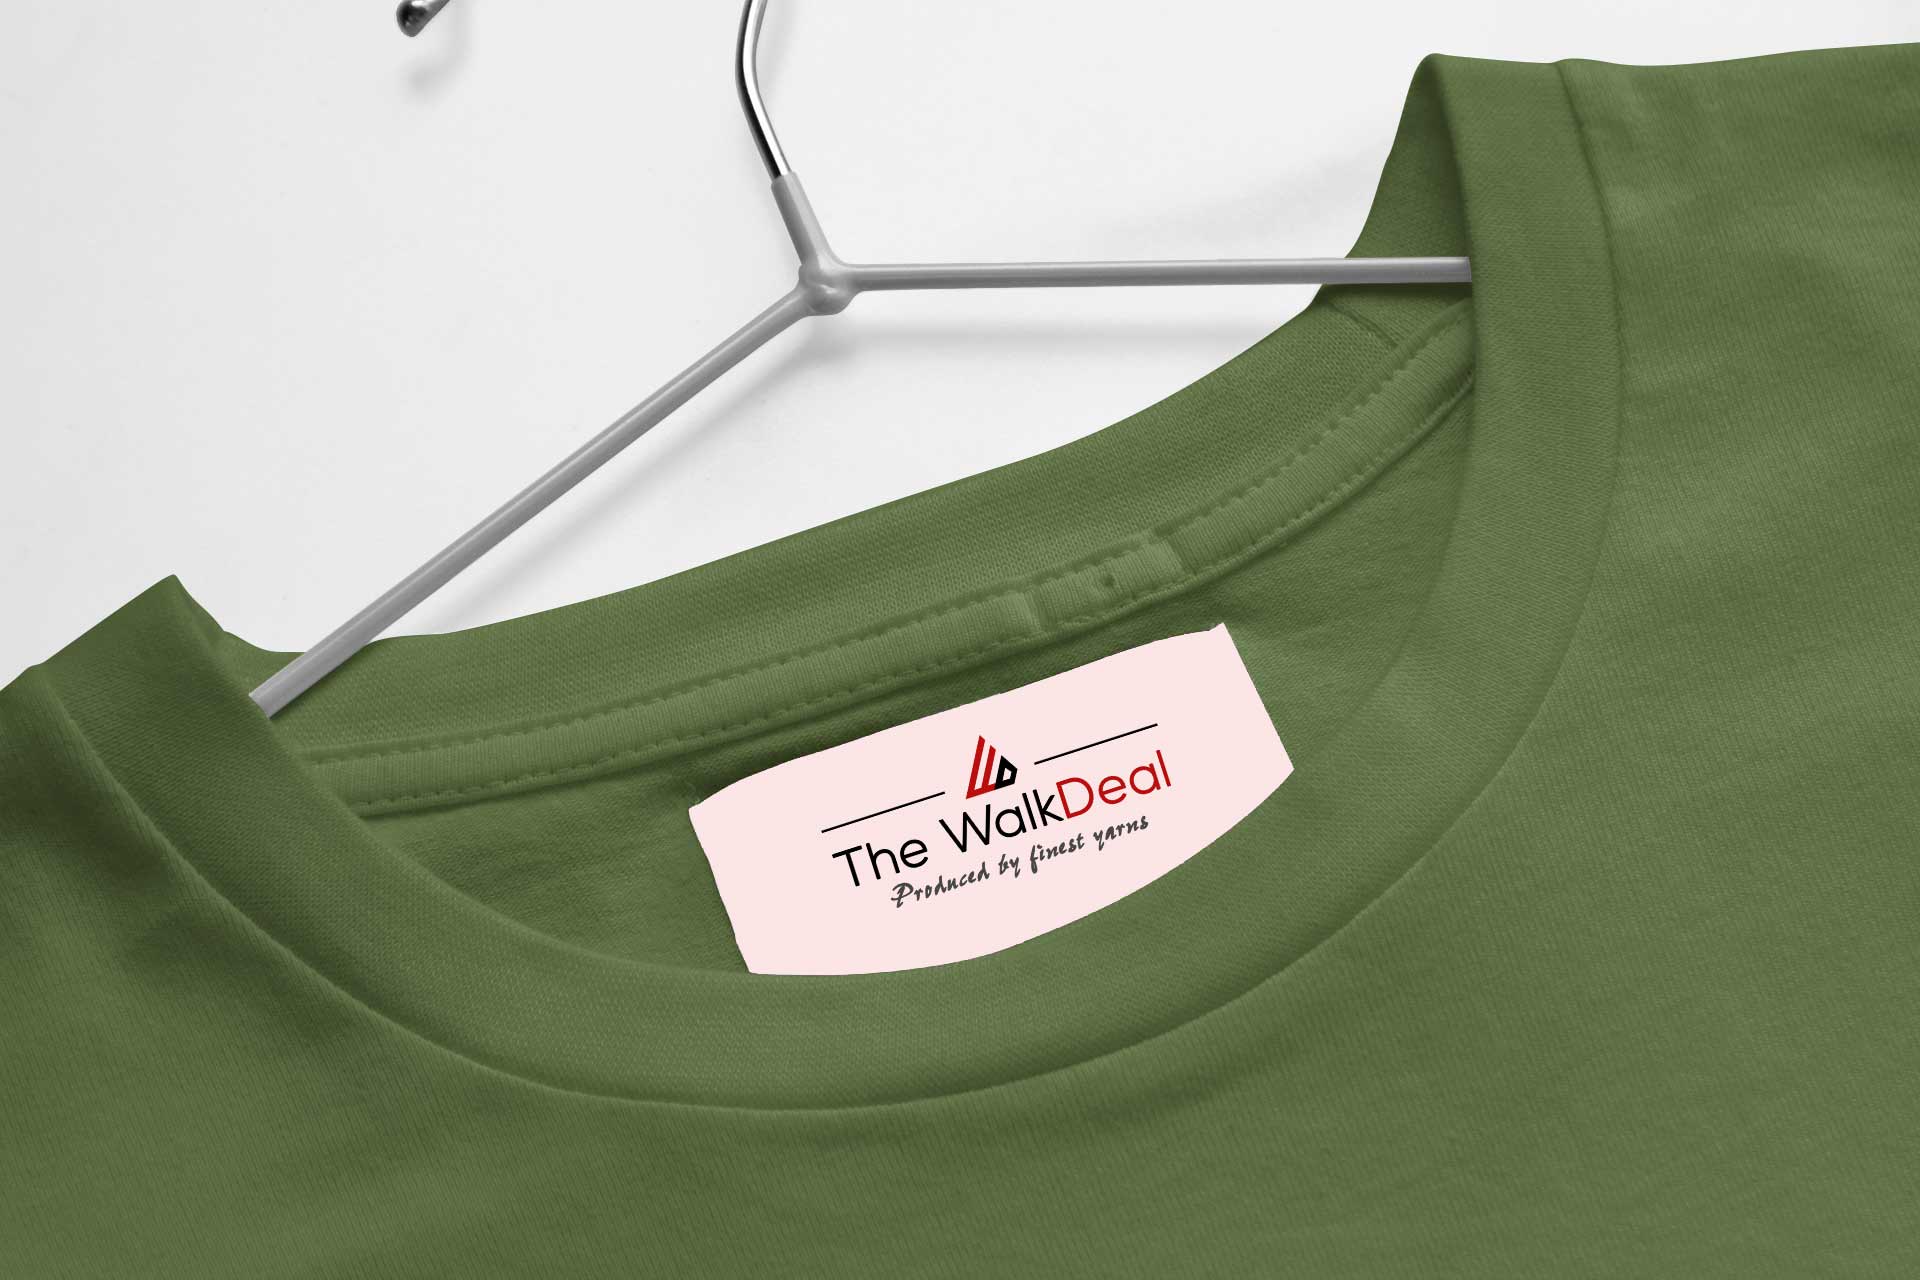 OliveGreen Round Neck T-Shirt For Men